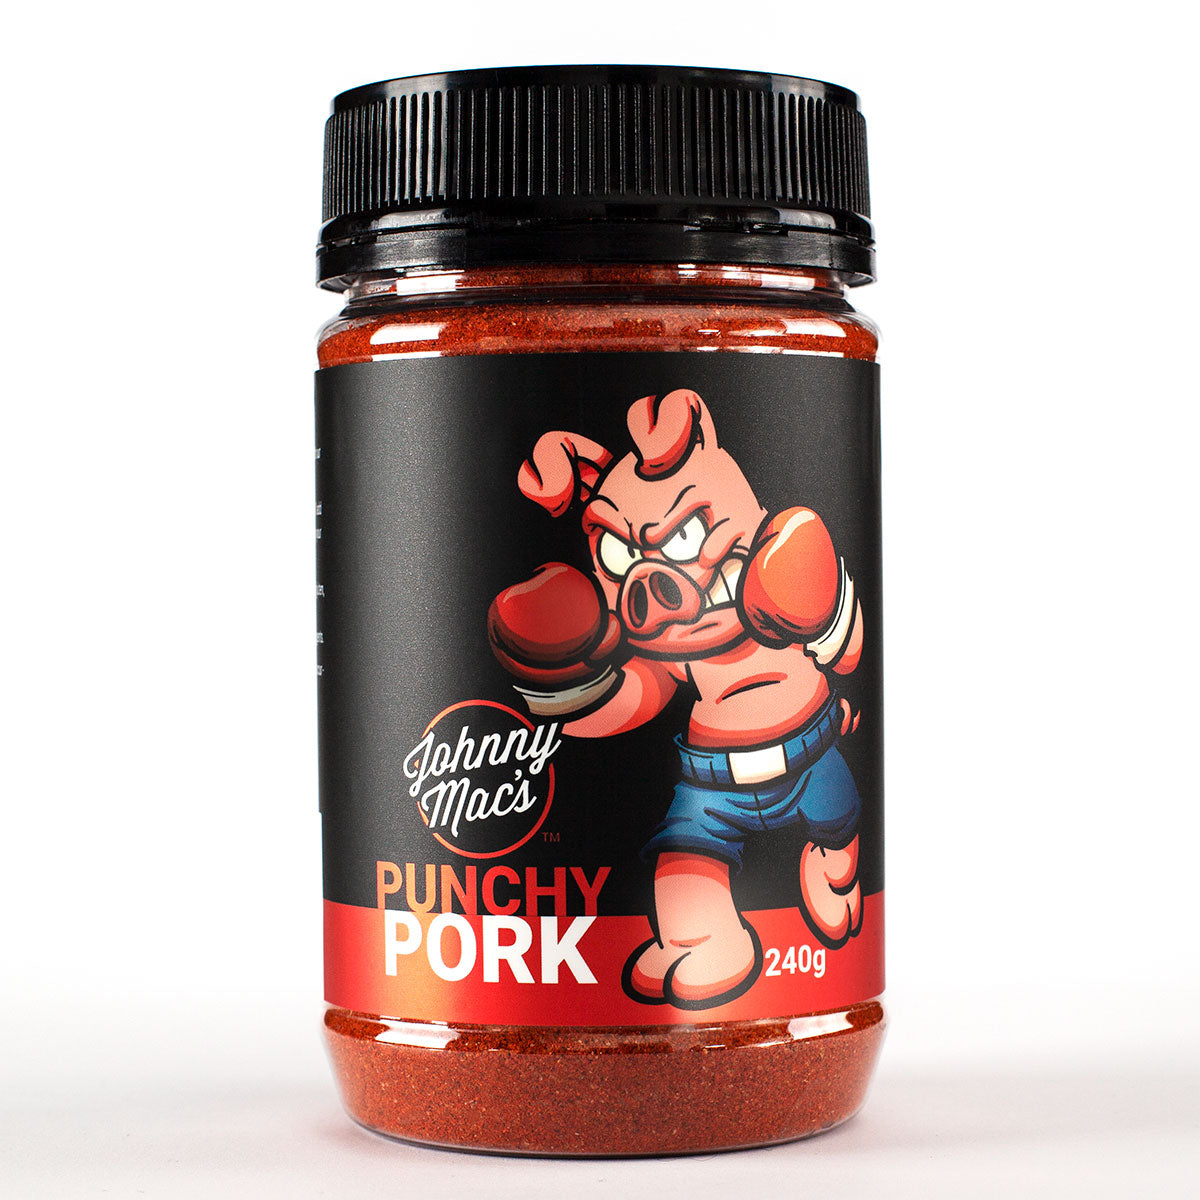 Punchy Pork - Johnny Mac's